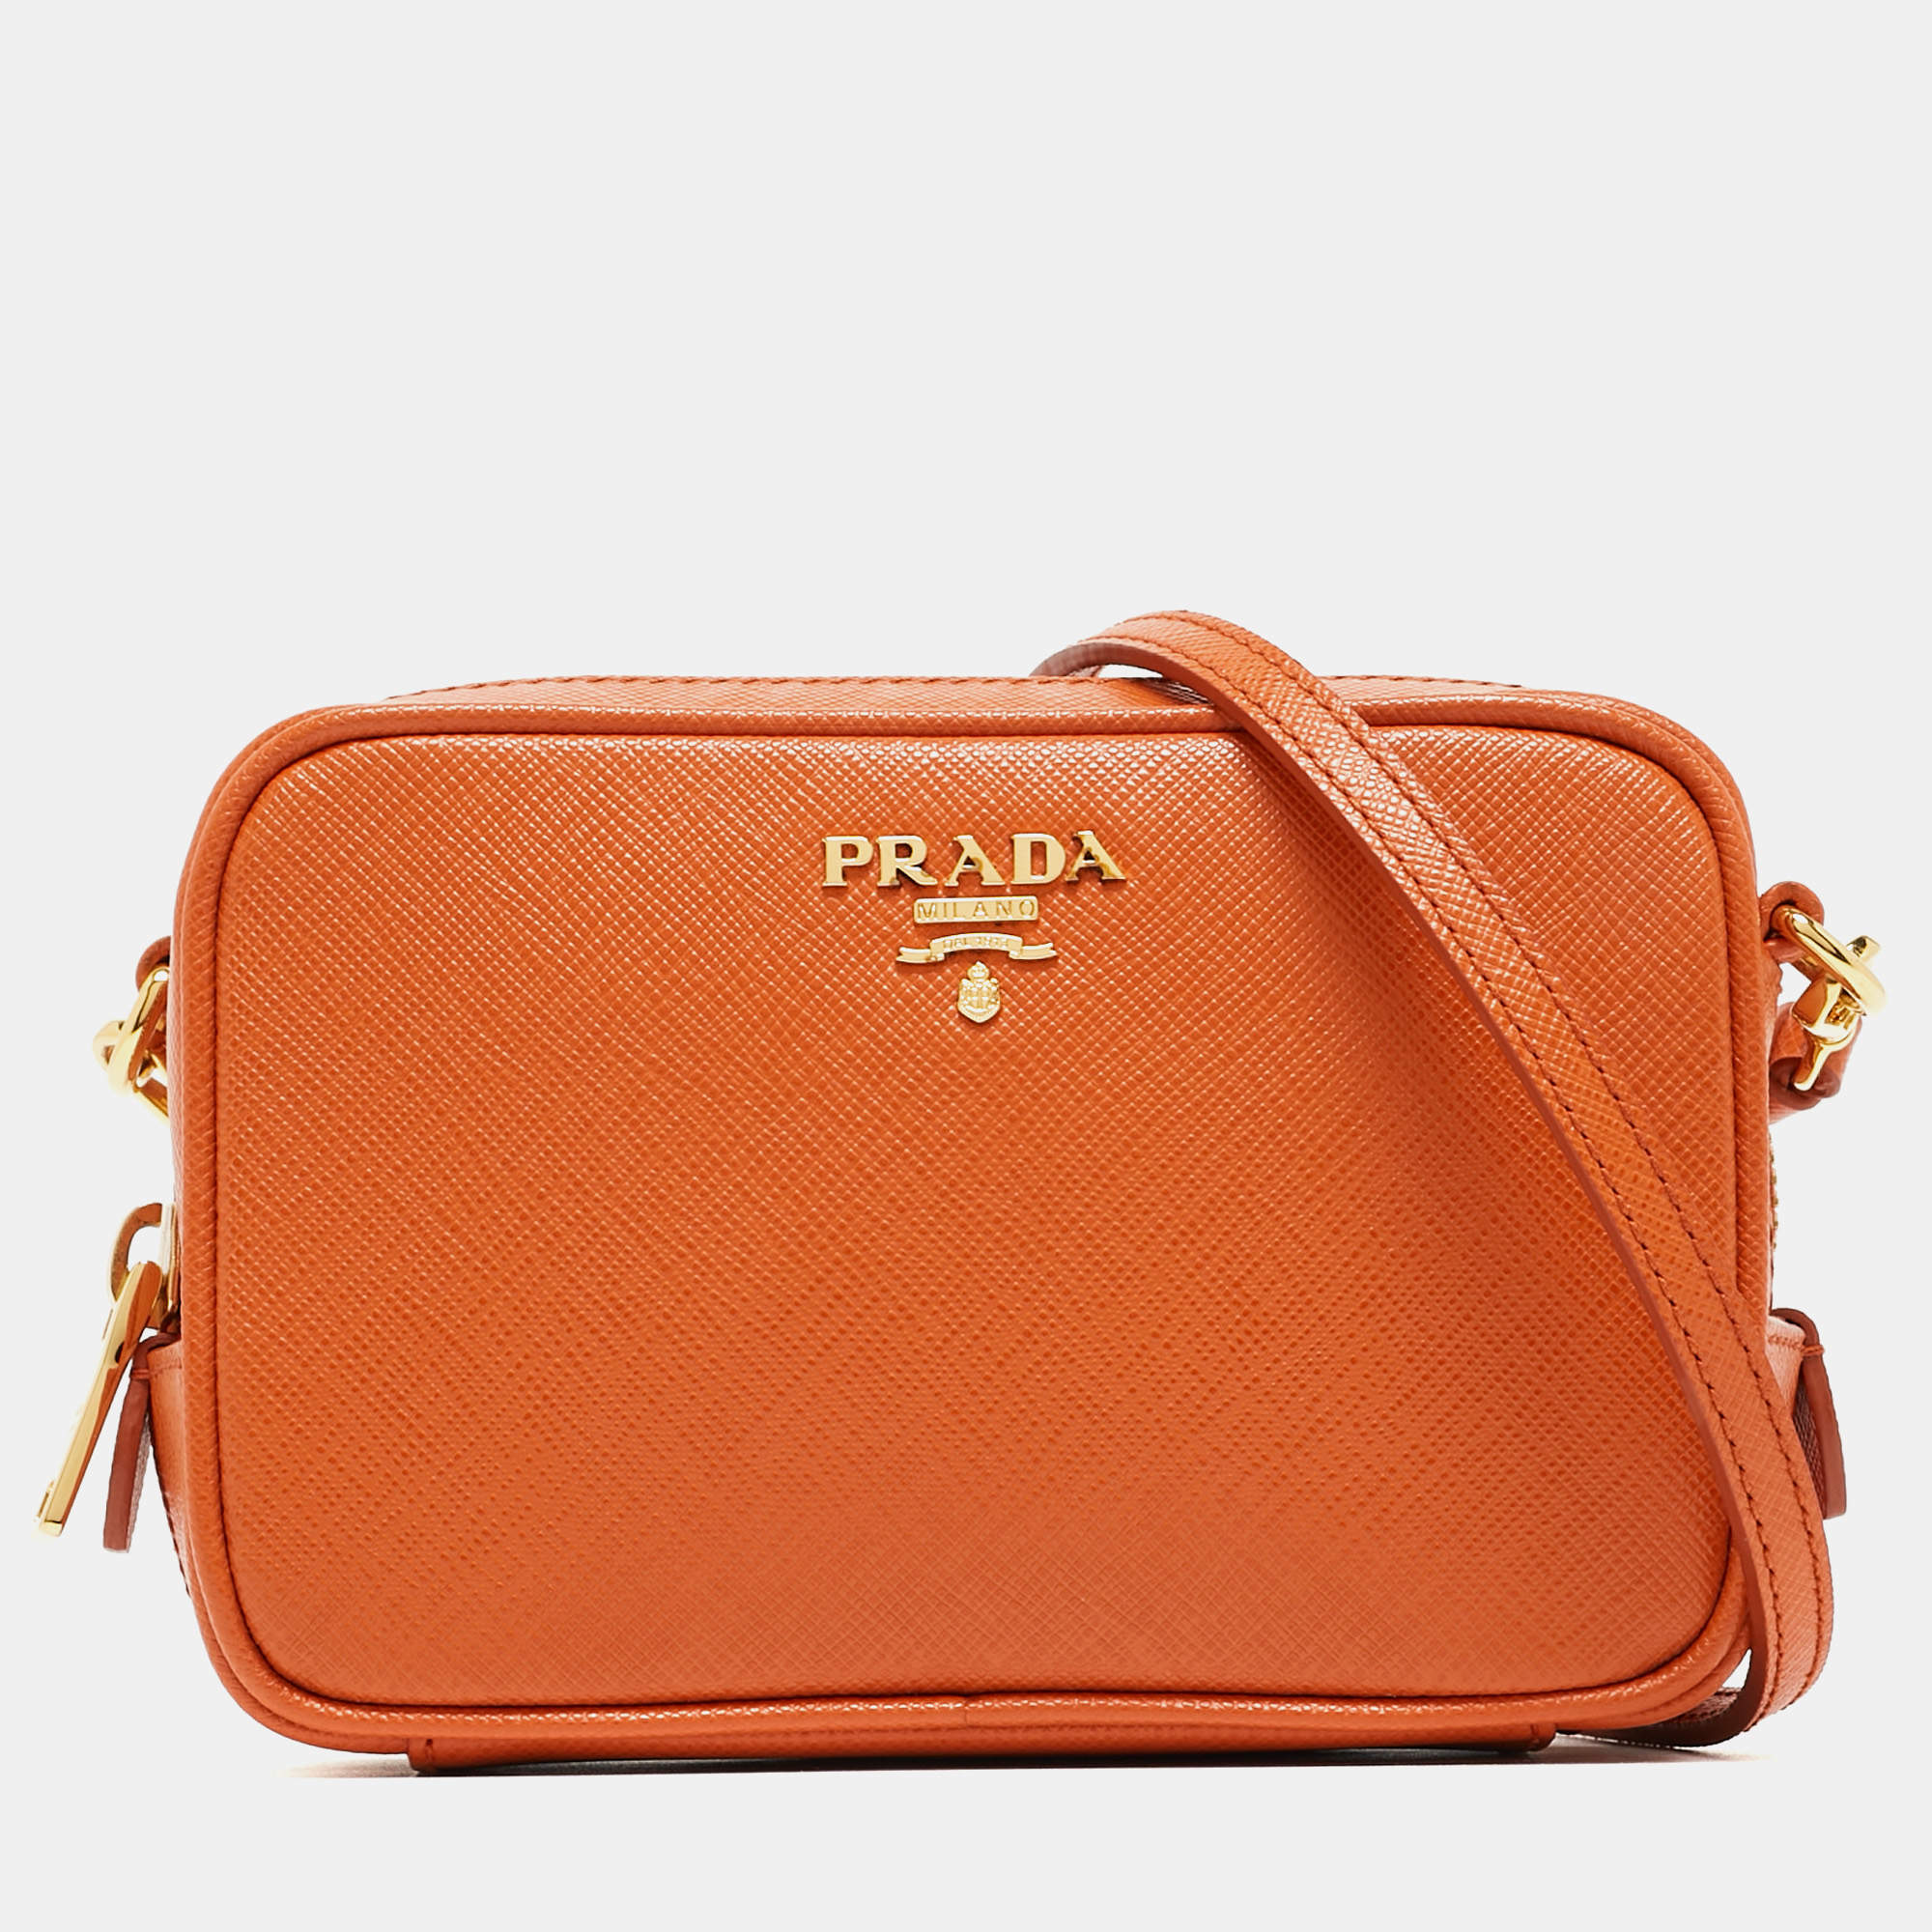 Authentic Prada Saffiano Pattina Bluette Satchel Large Women's Purse Handbag  | eBay